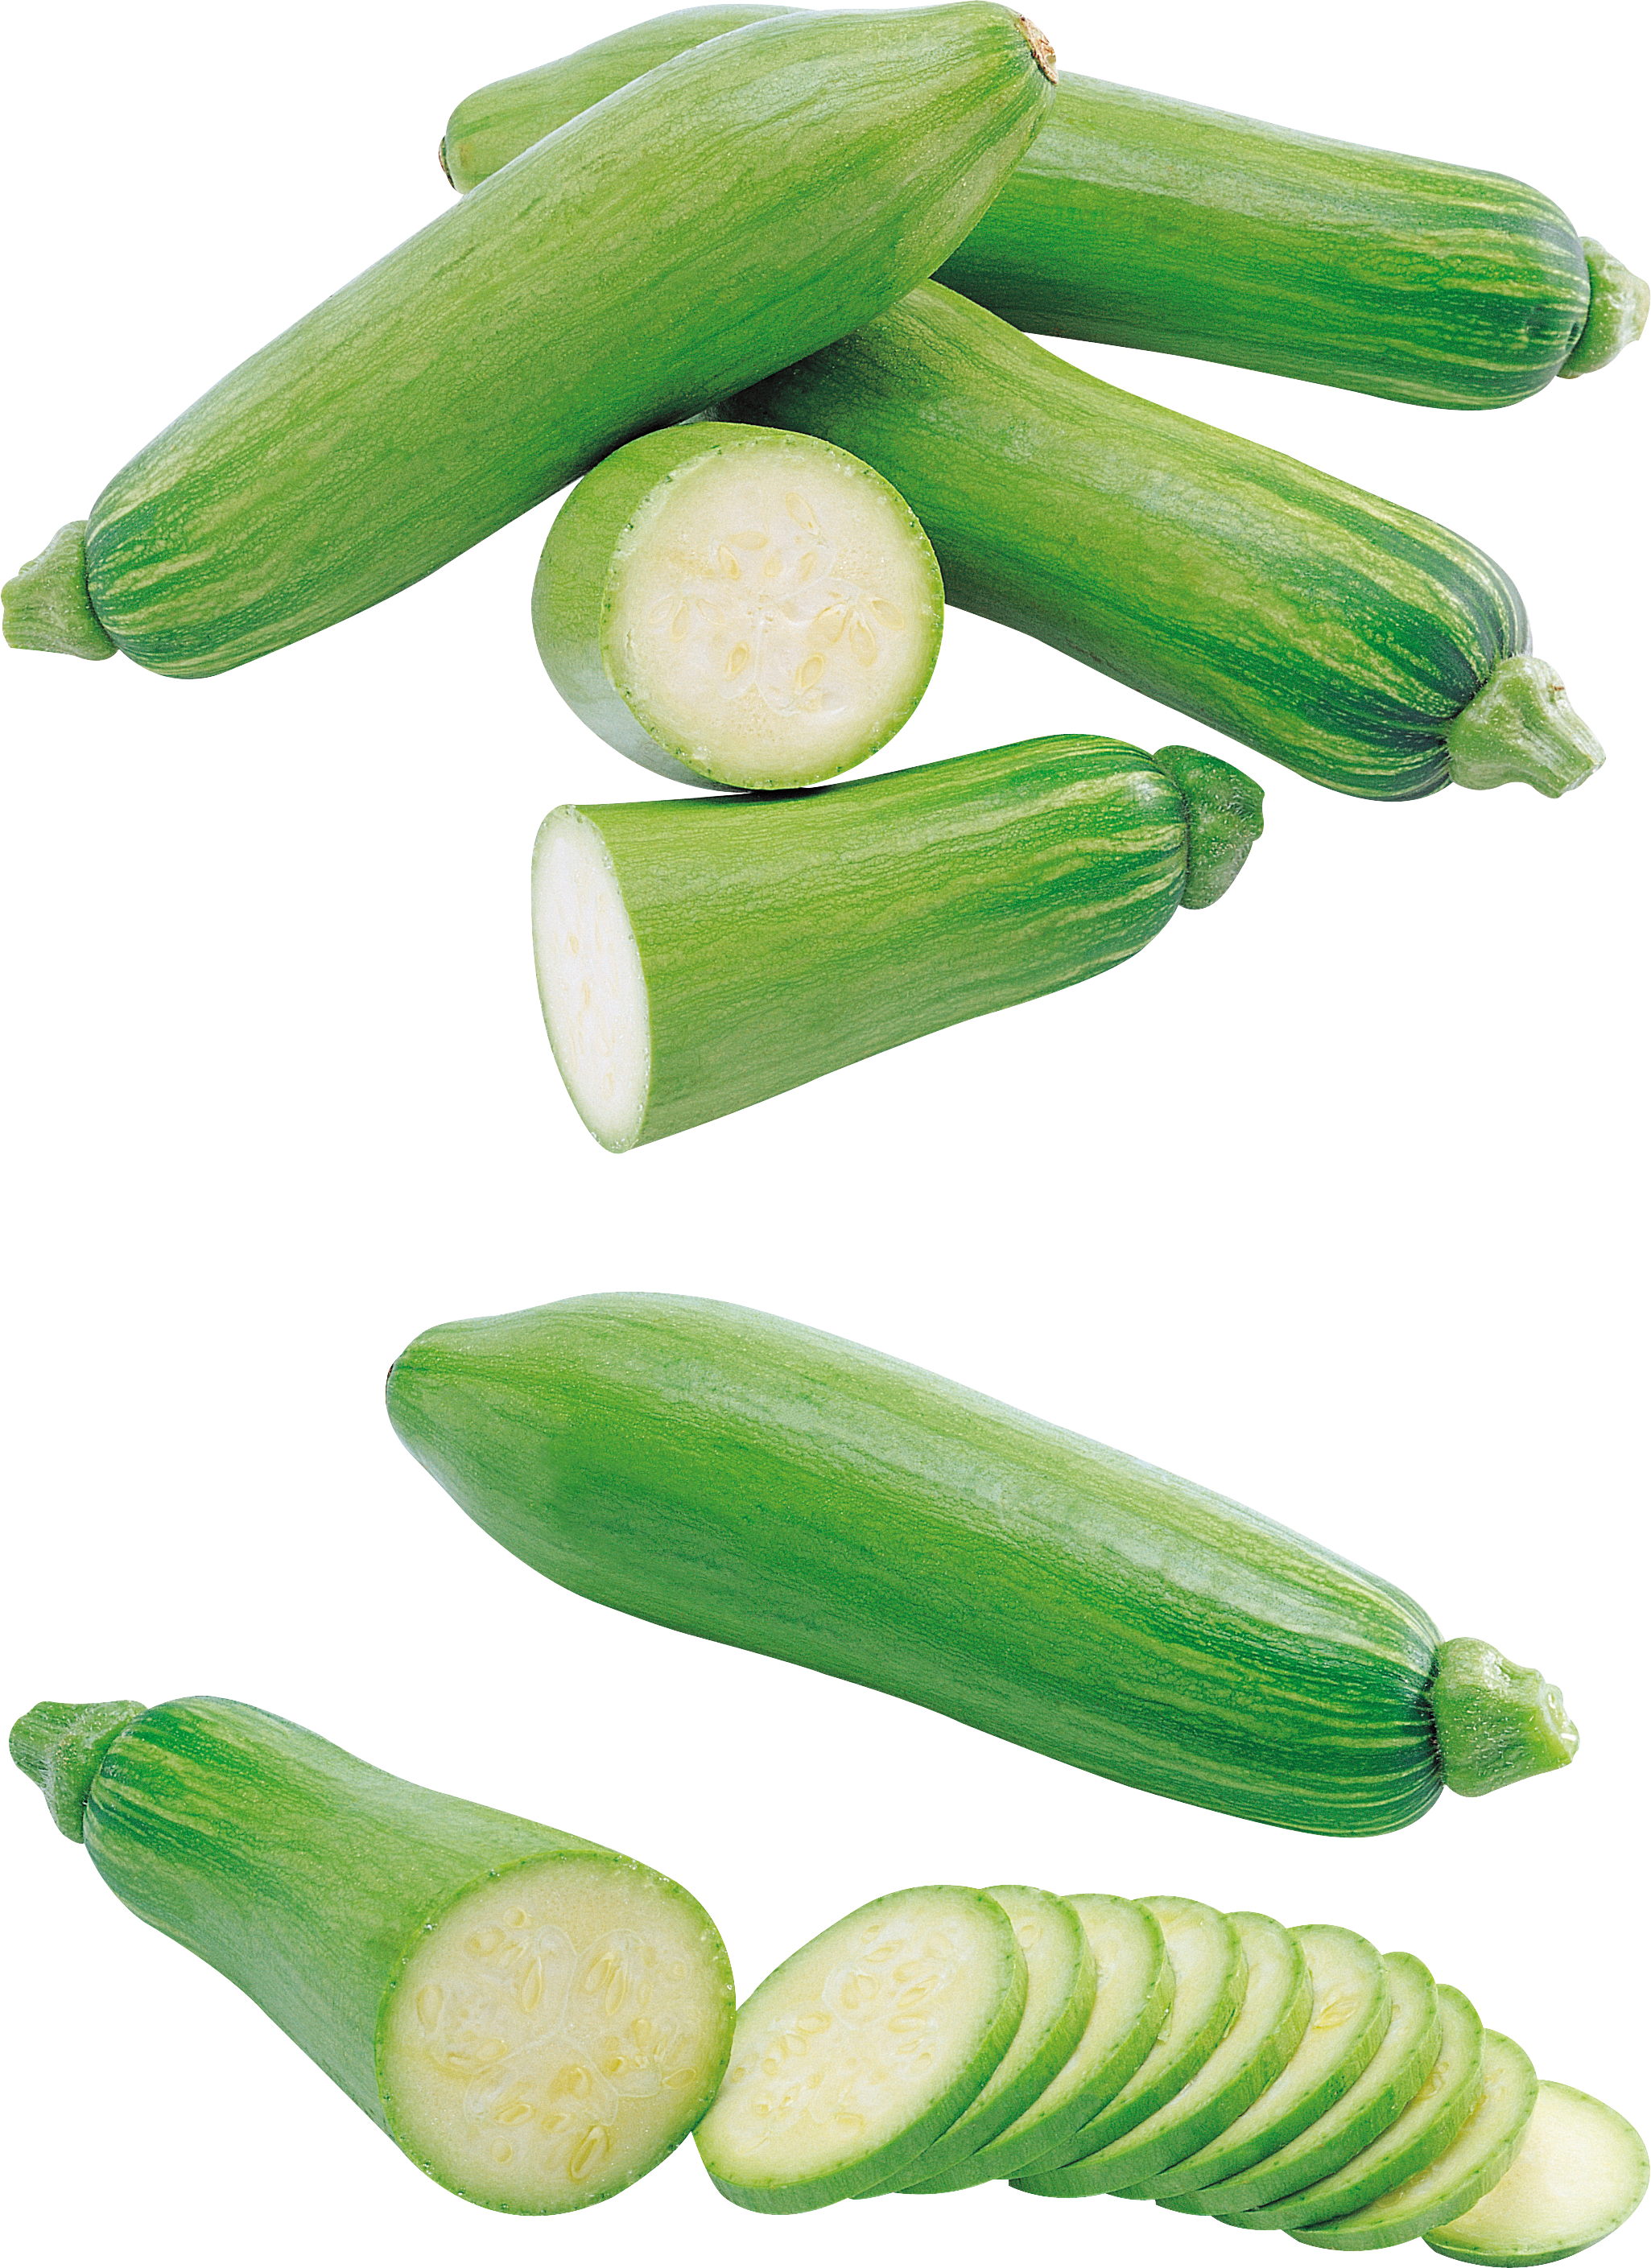 Картинка овощей по отдельности. Vegetable marrow, Squash, Zucchini. Овощи по отдельности. Кабачок картинка. Овощи штучно.